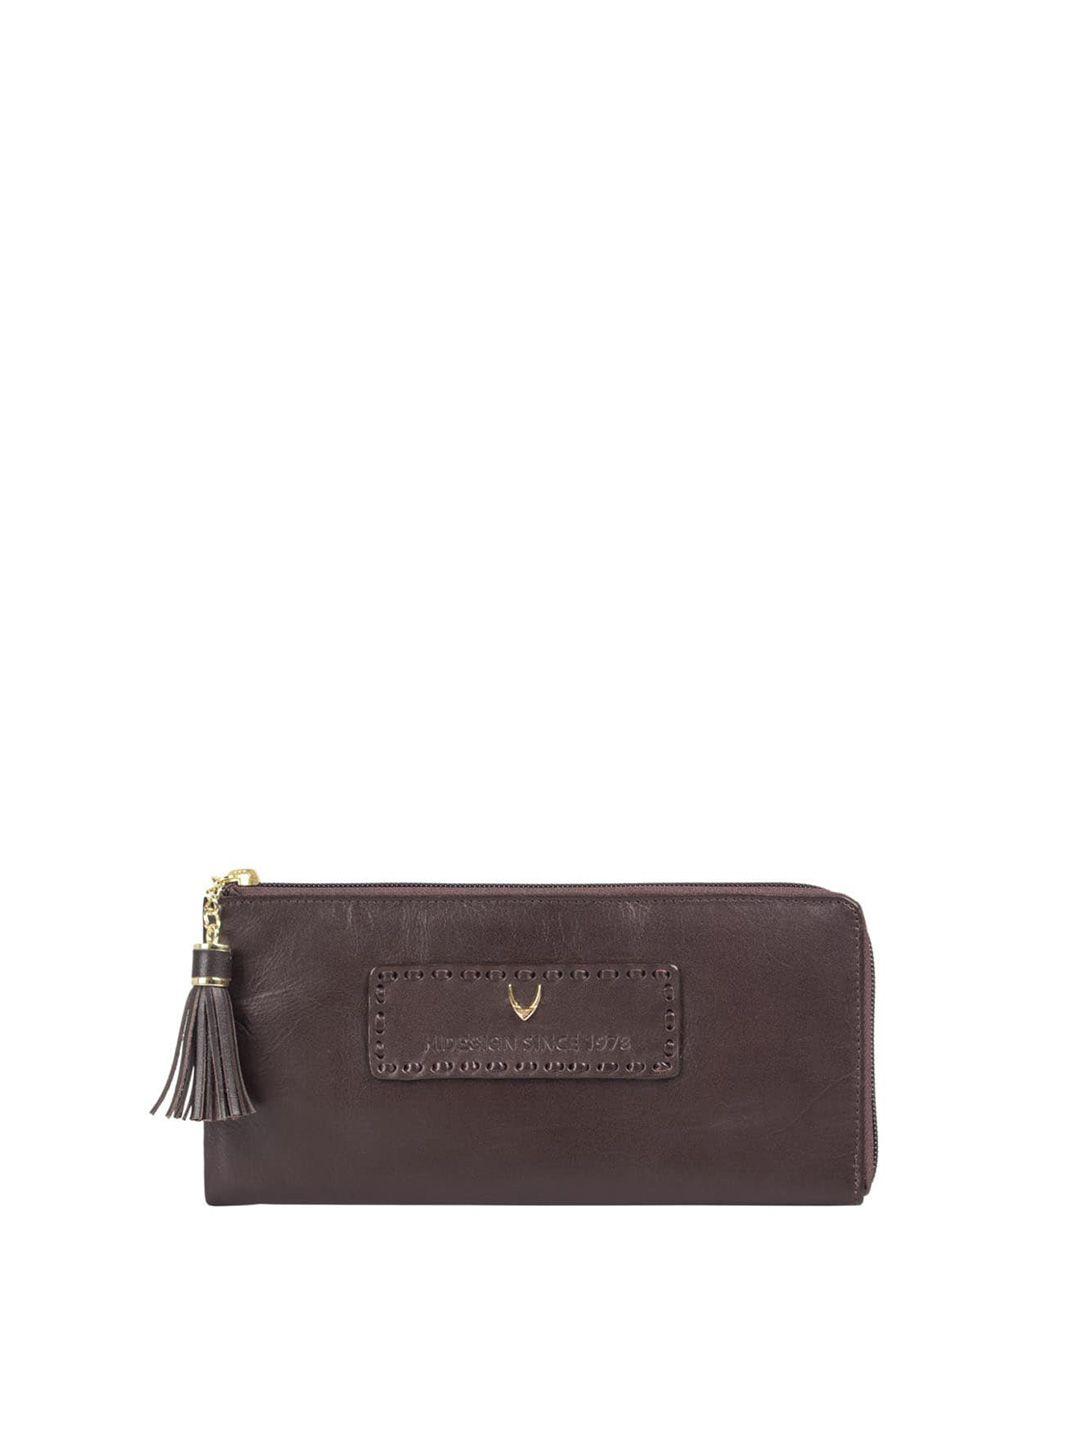 hidesign brown purse clutch with tassel